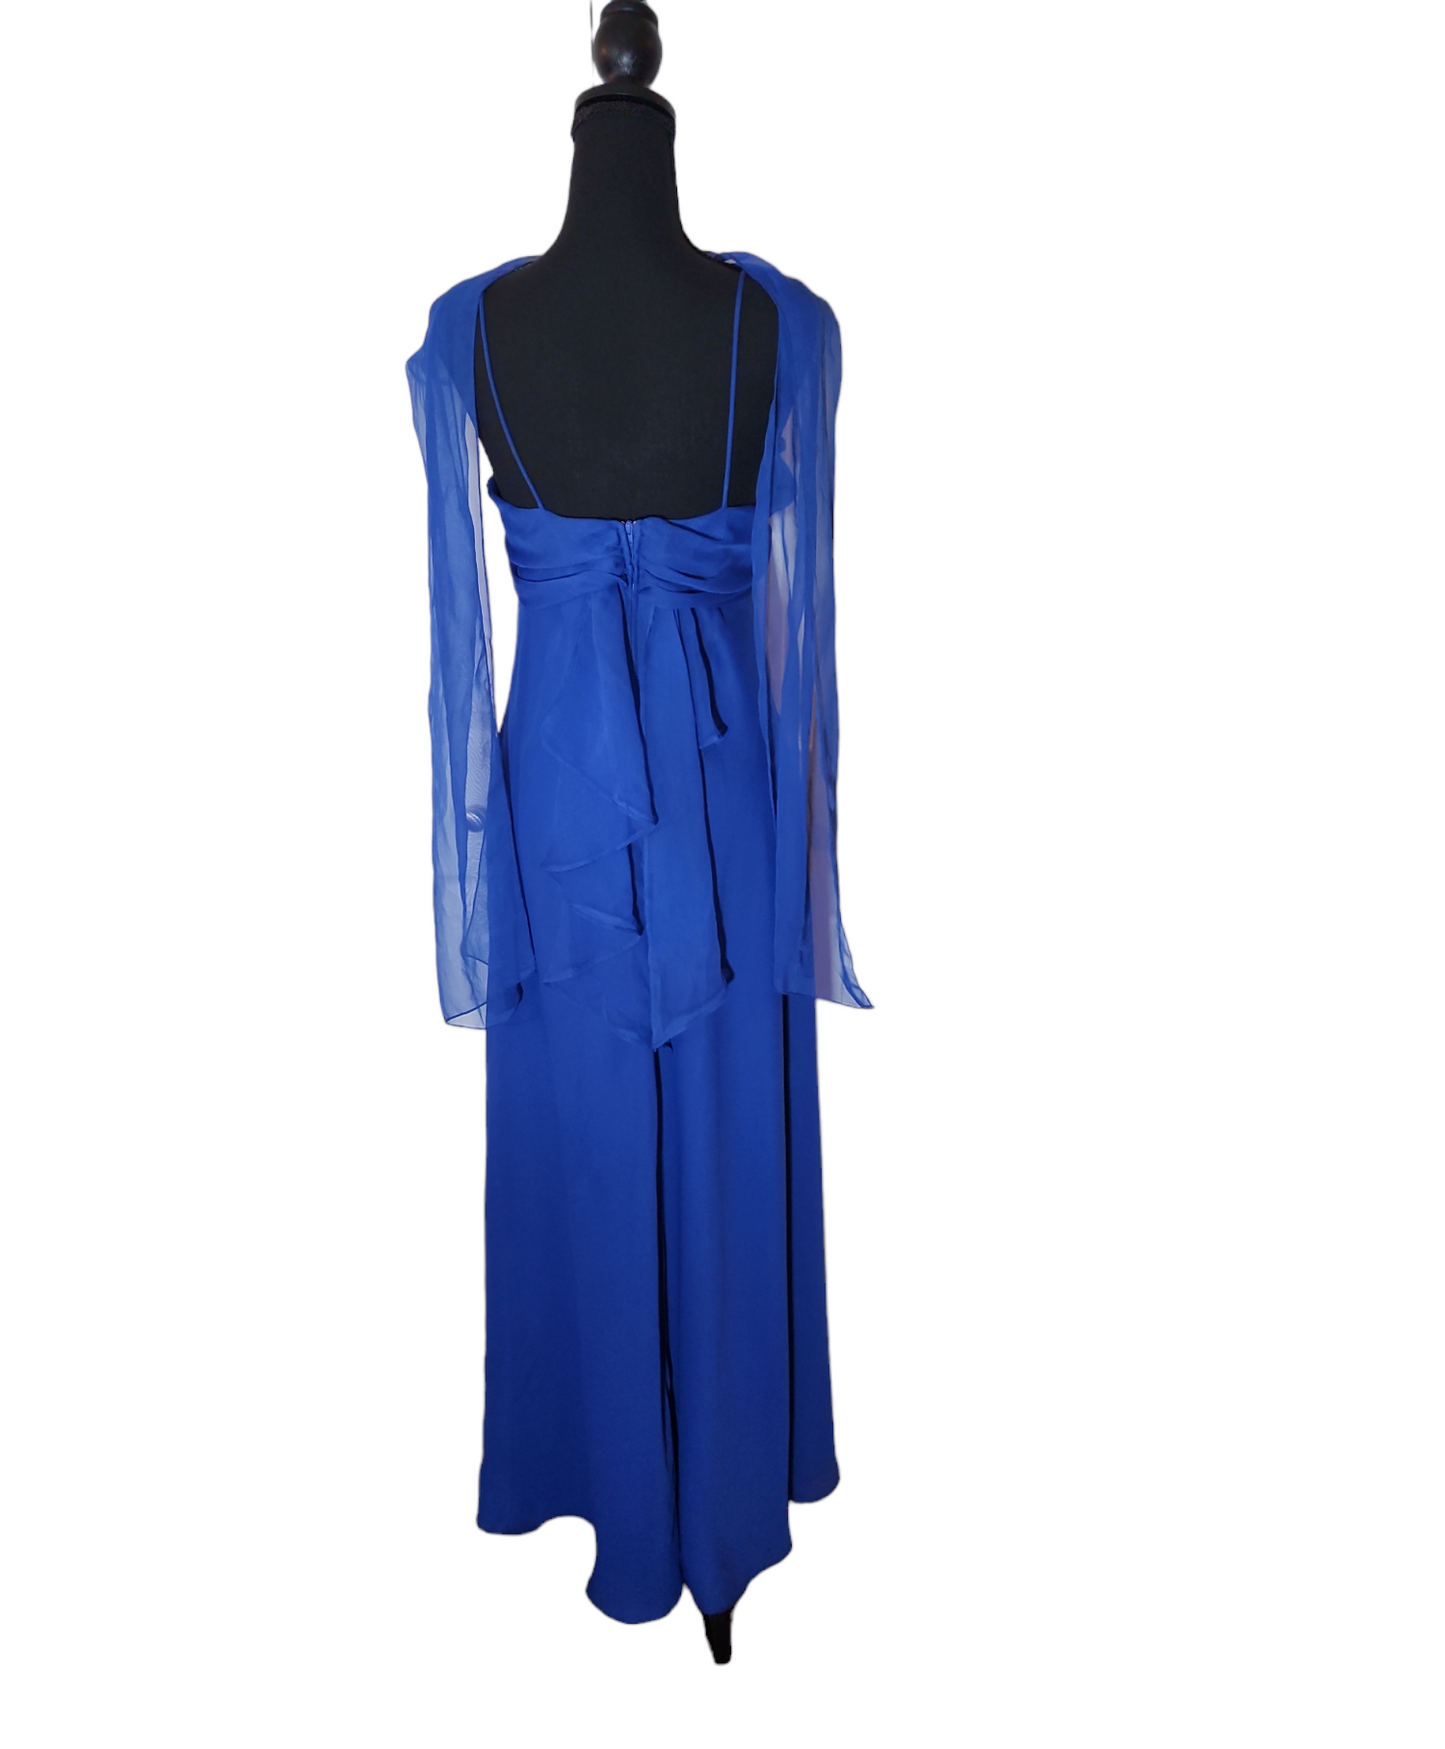 Fiesta - Royal Blue Formal Draped Dress w/ Scarf